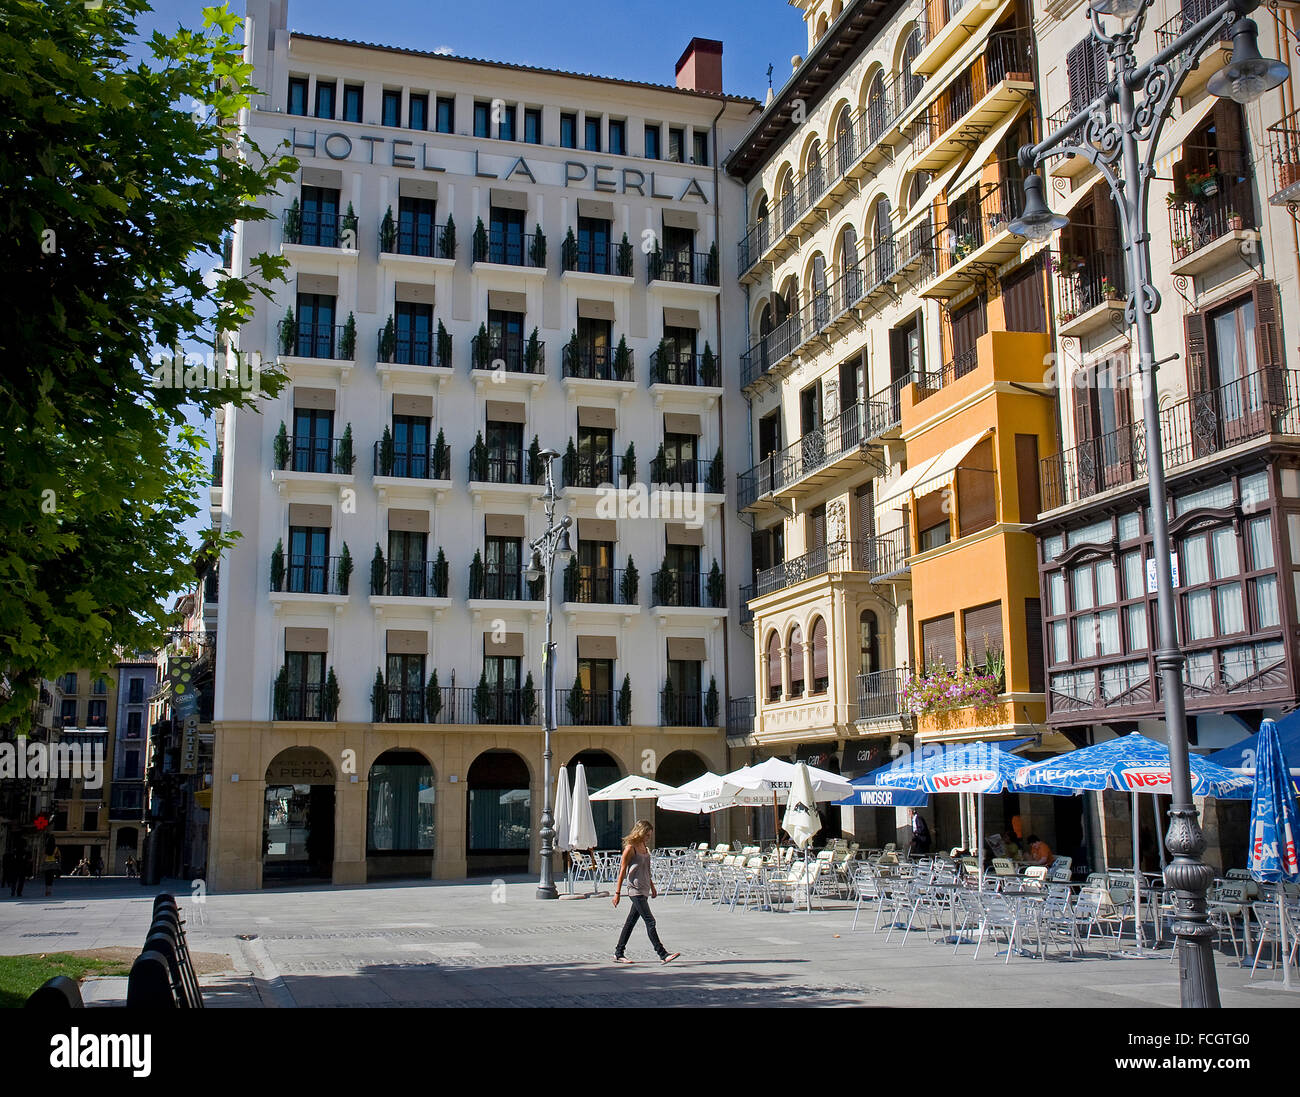 Hemingway. Hotel La Perla. Pamplona. Navarre. spain Stock Photo - Alamy